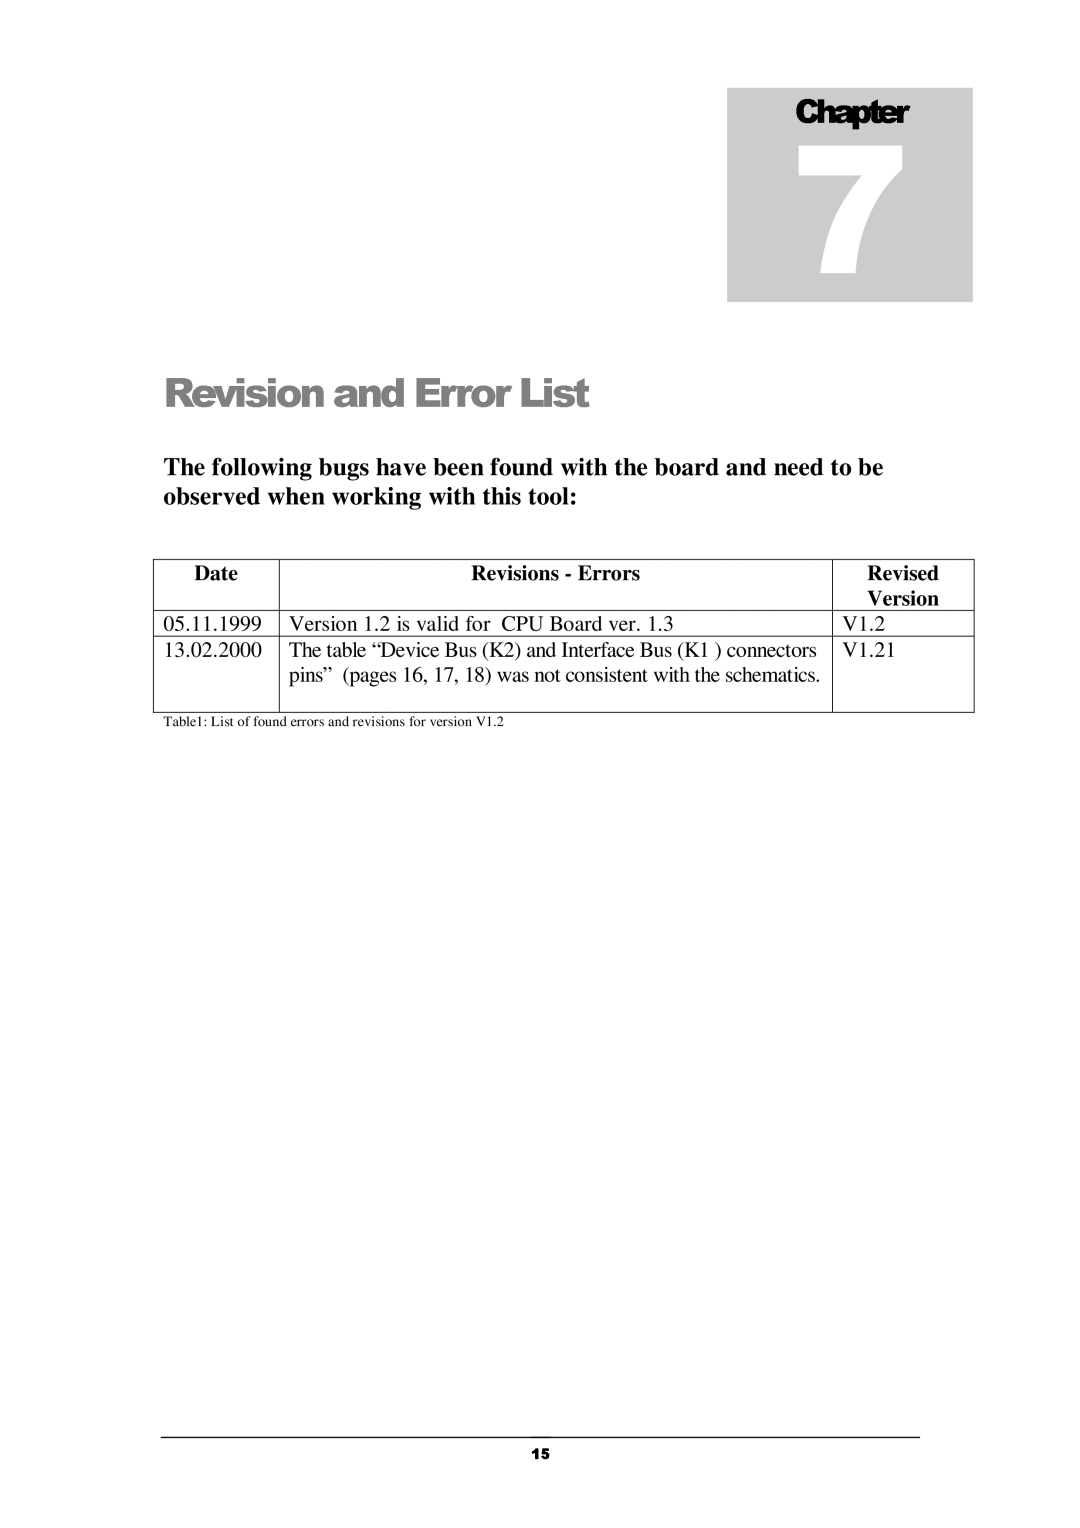 Fujitsu 16LX manual Date, Revisions - Errors, Revised, Version, 5HYLVLRQDQGUURU/LVW, Kdswhu 